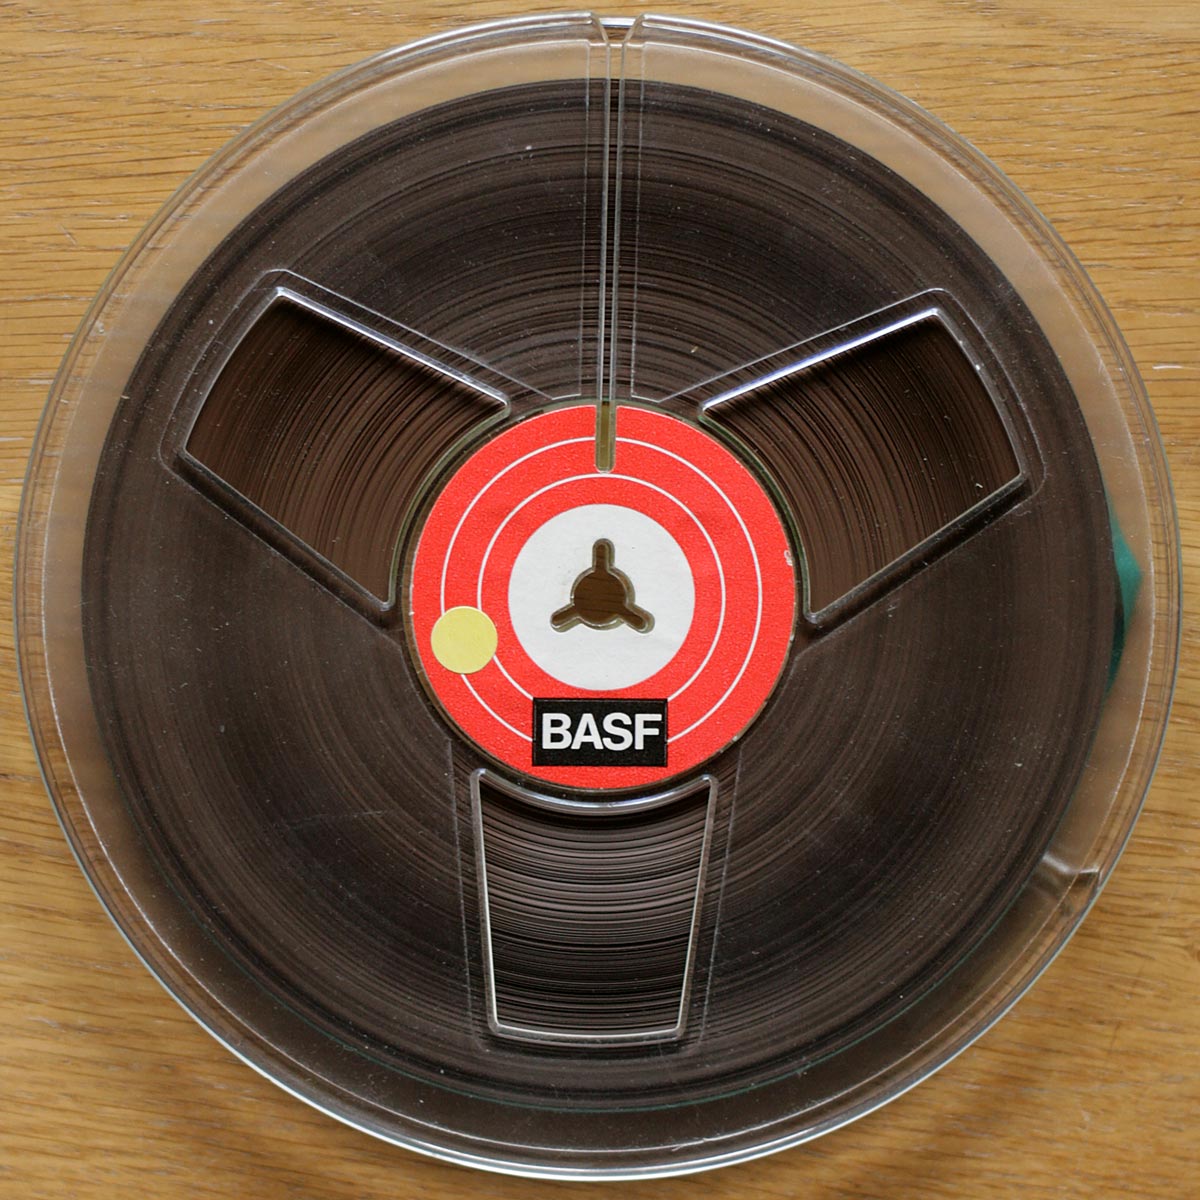 BASF • DP26 • Ferro LH HiFi • Bande magnétique sans boîtier • Sound recording tape without box • Spielband ohne Schuber • Ø 18 cm • Occasion • Used • Gebraucht